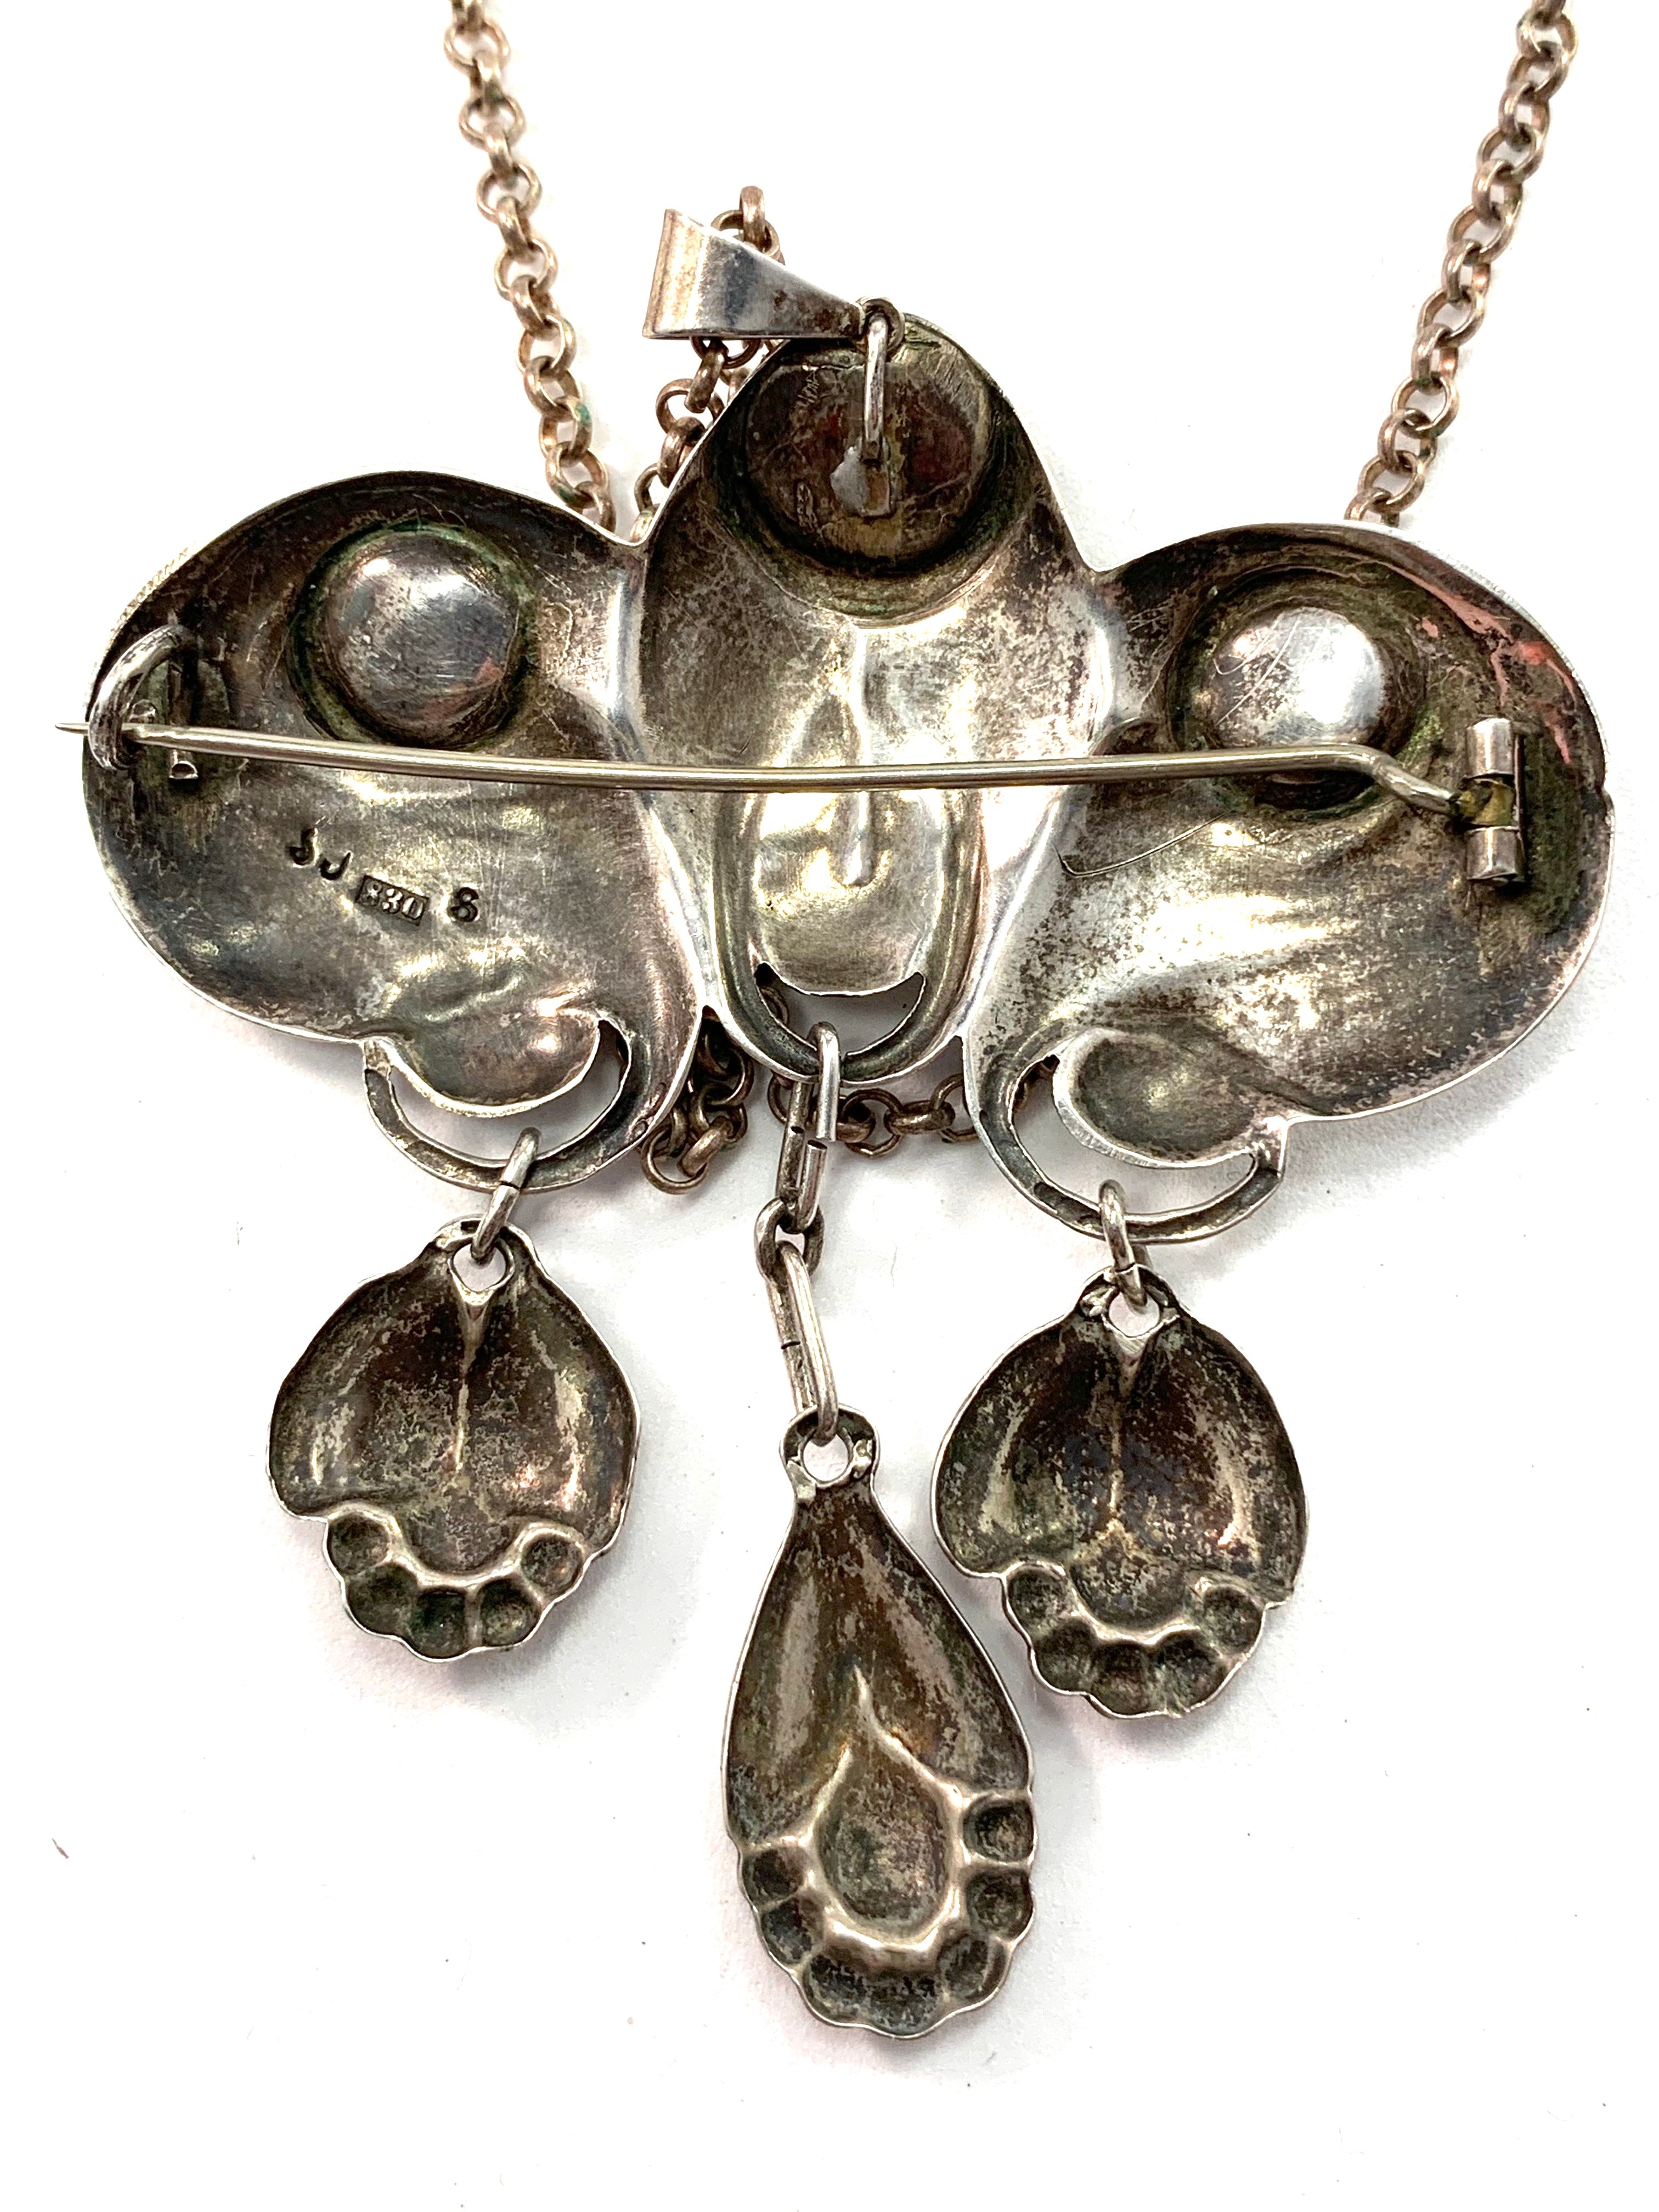 Evald Nielsen for SL Jacobsen & Co, Copenhagen 1910-17 Arts and Crafts Skonvirke 830 Silver Amber Brooch Pendant Necklace.